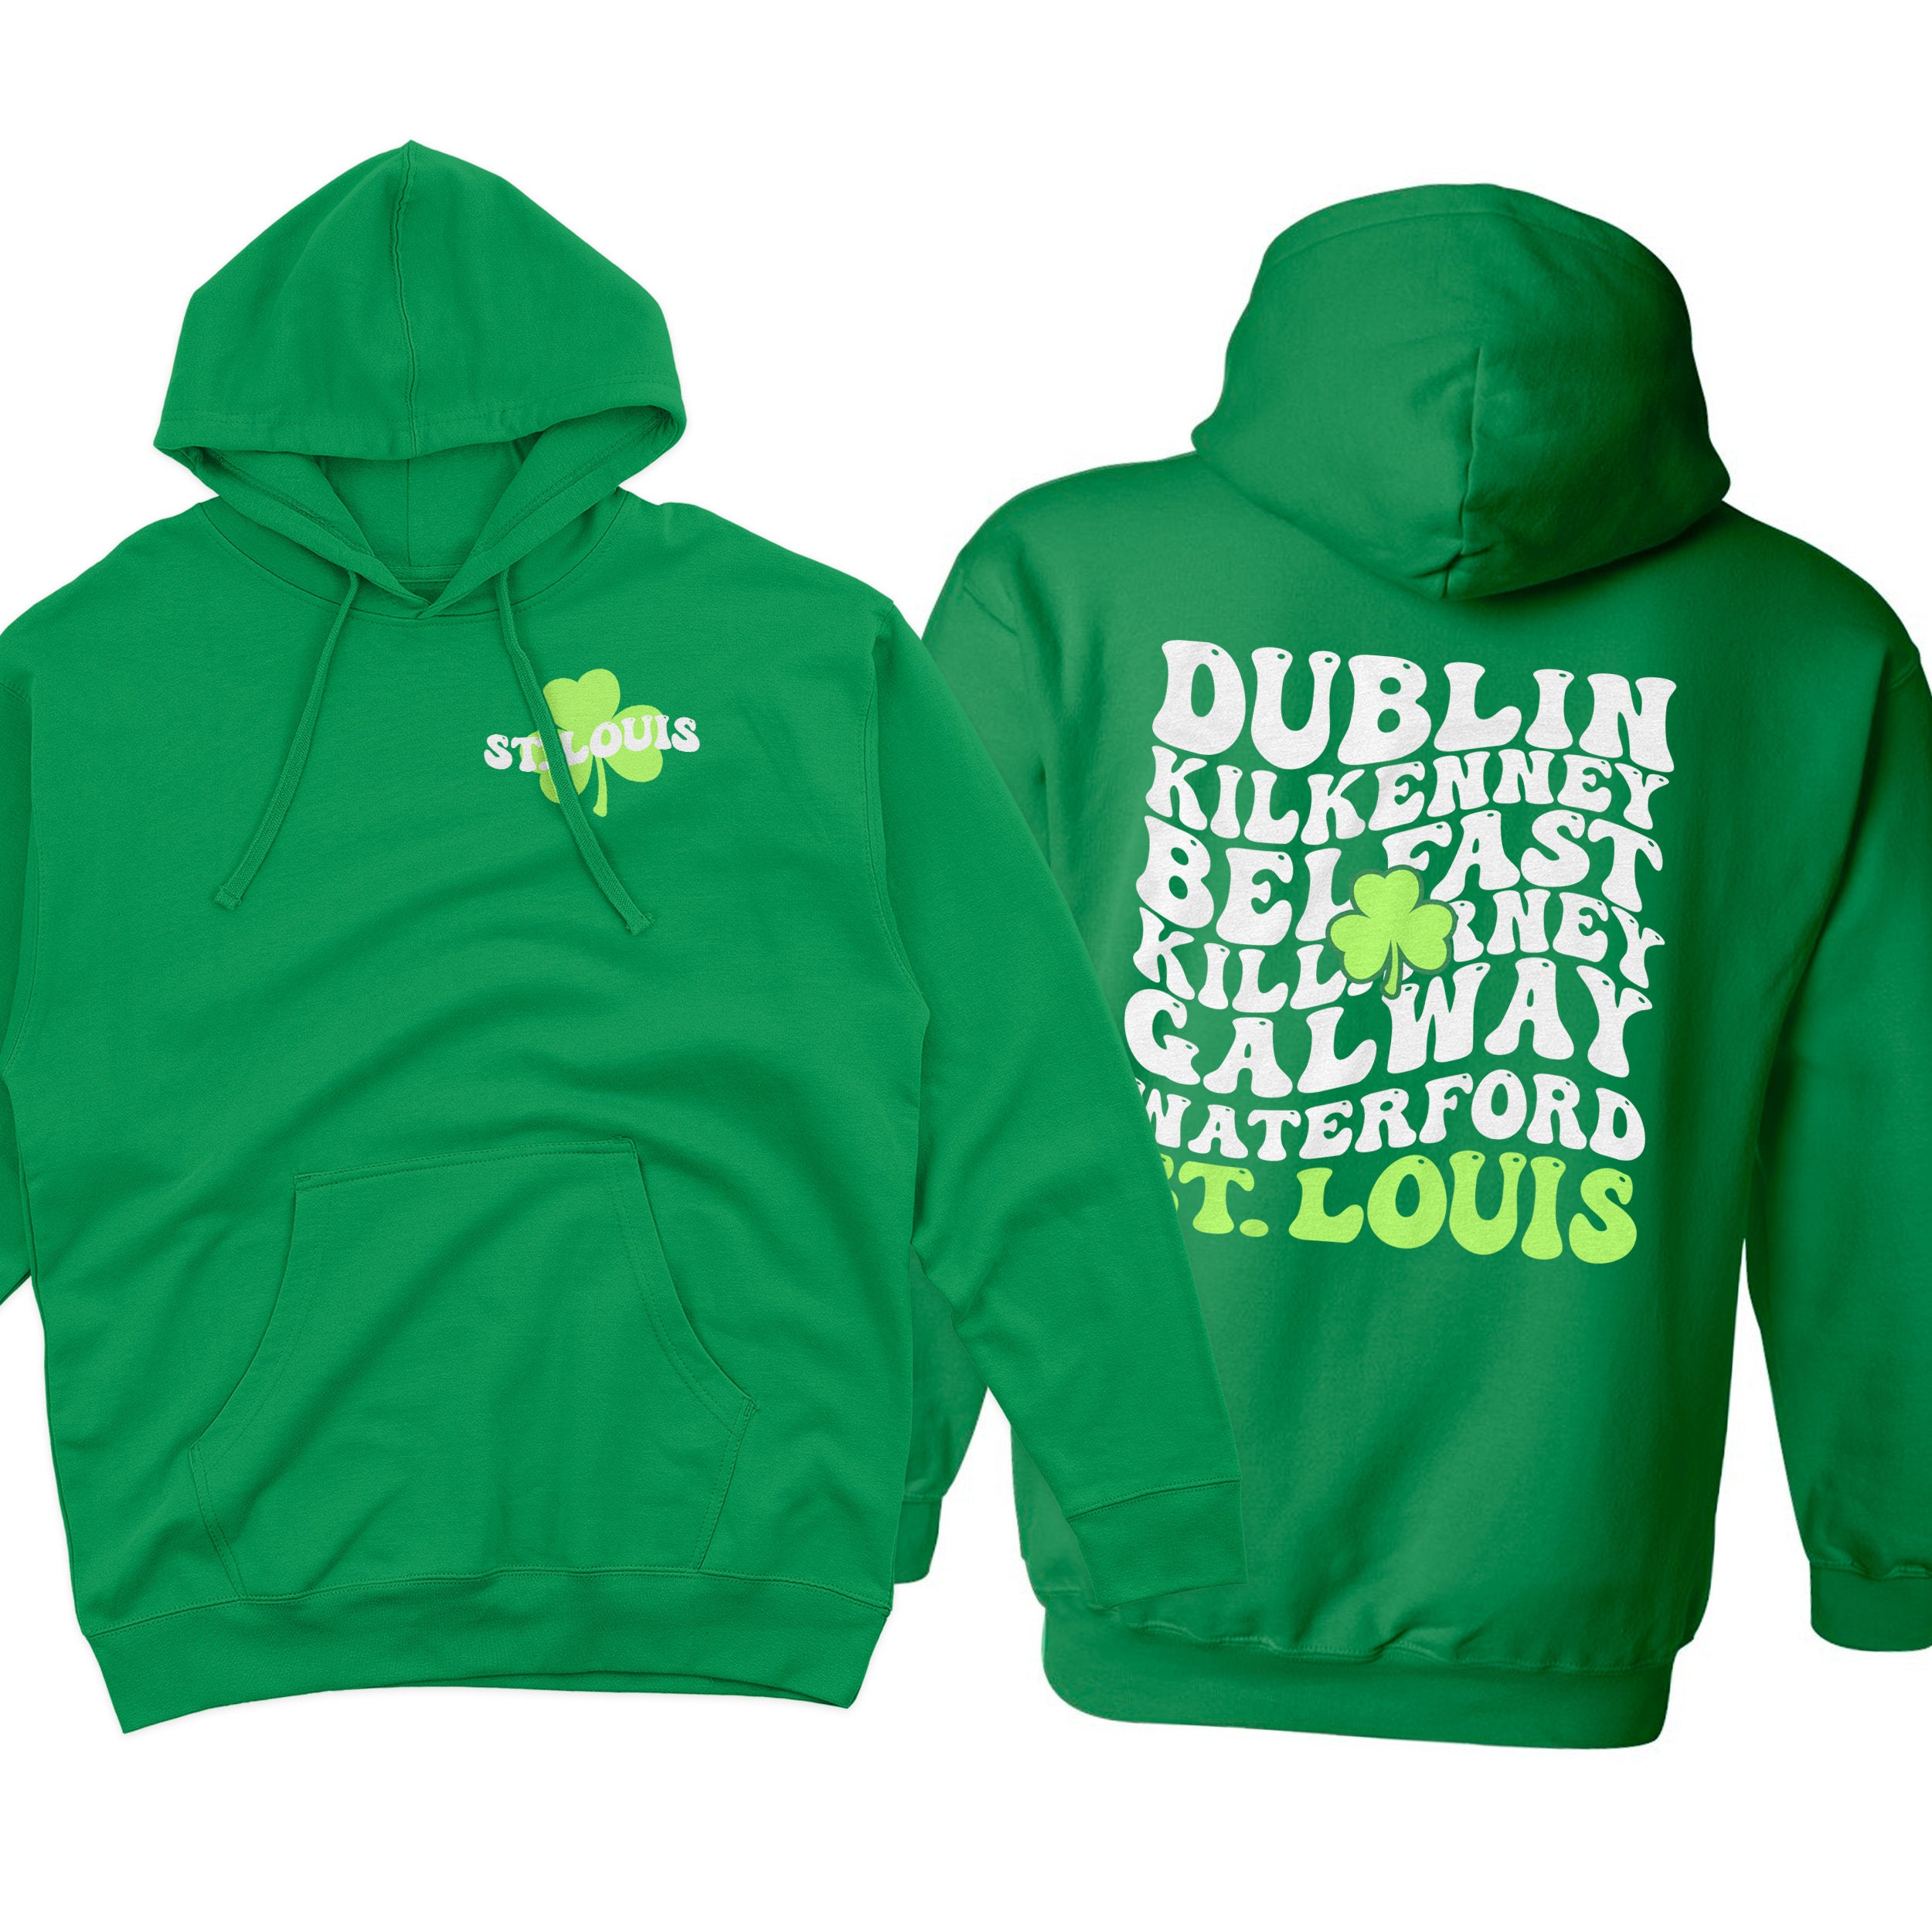 citysoulstreetwear St. Louis Dublin Belfast Galway St Patricks Day Green Hooded Sweatshirt | Irish Cities Front and Back Print Retro Hoodie snls2-058FB-hoodie